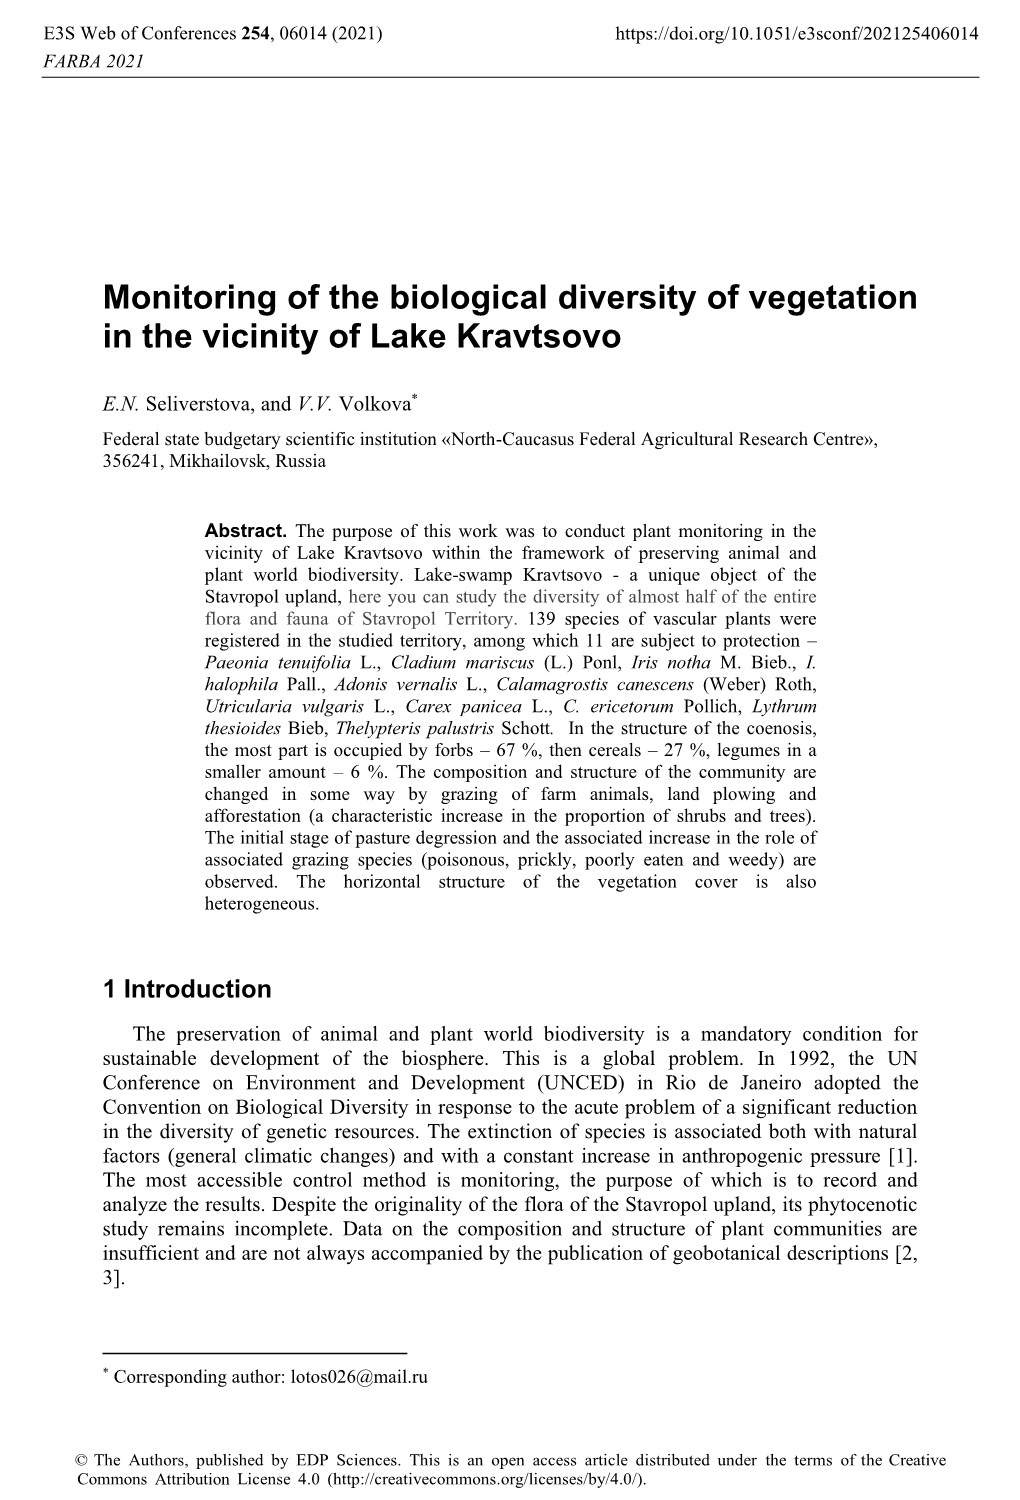 Monitoring of the Biological Diversity of Vegetation in the Vicinity of Lake Kravtsovo